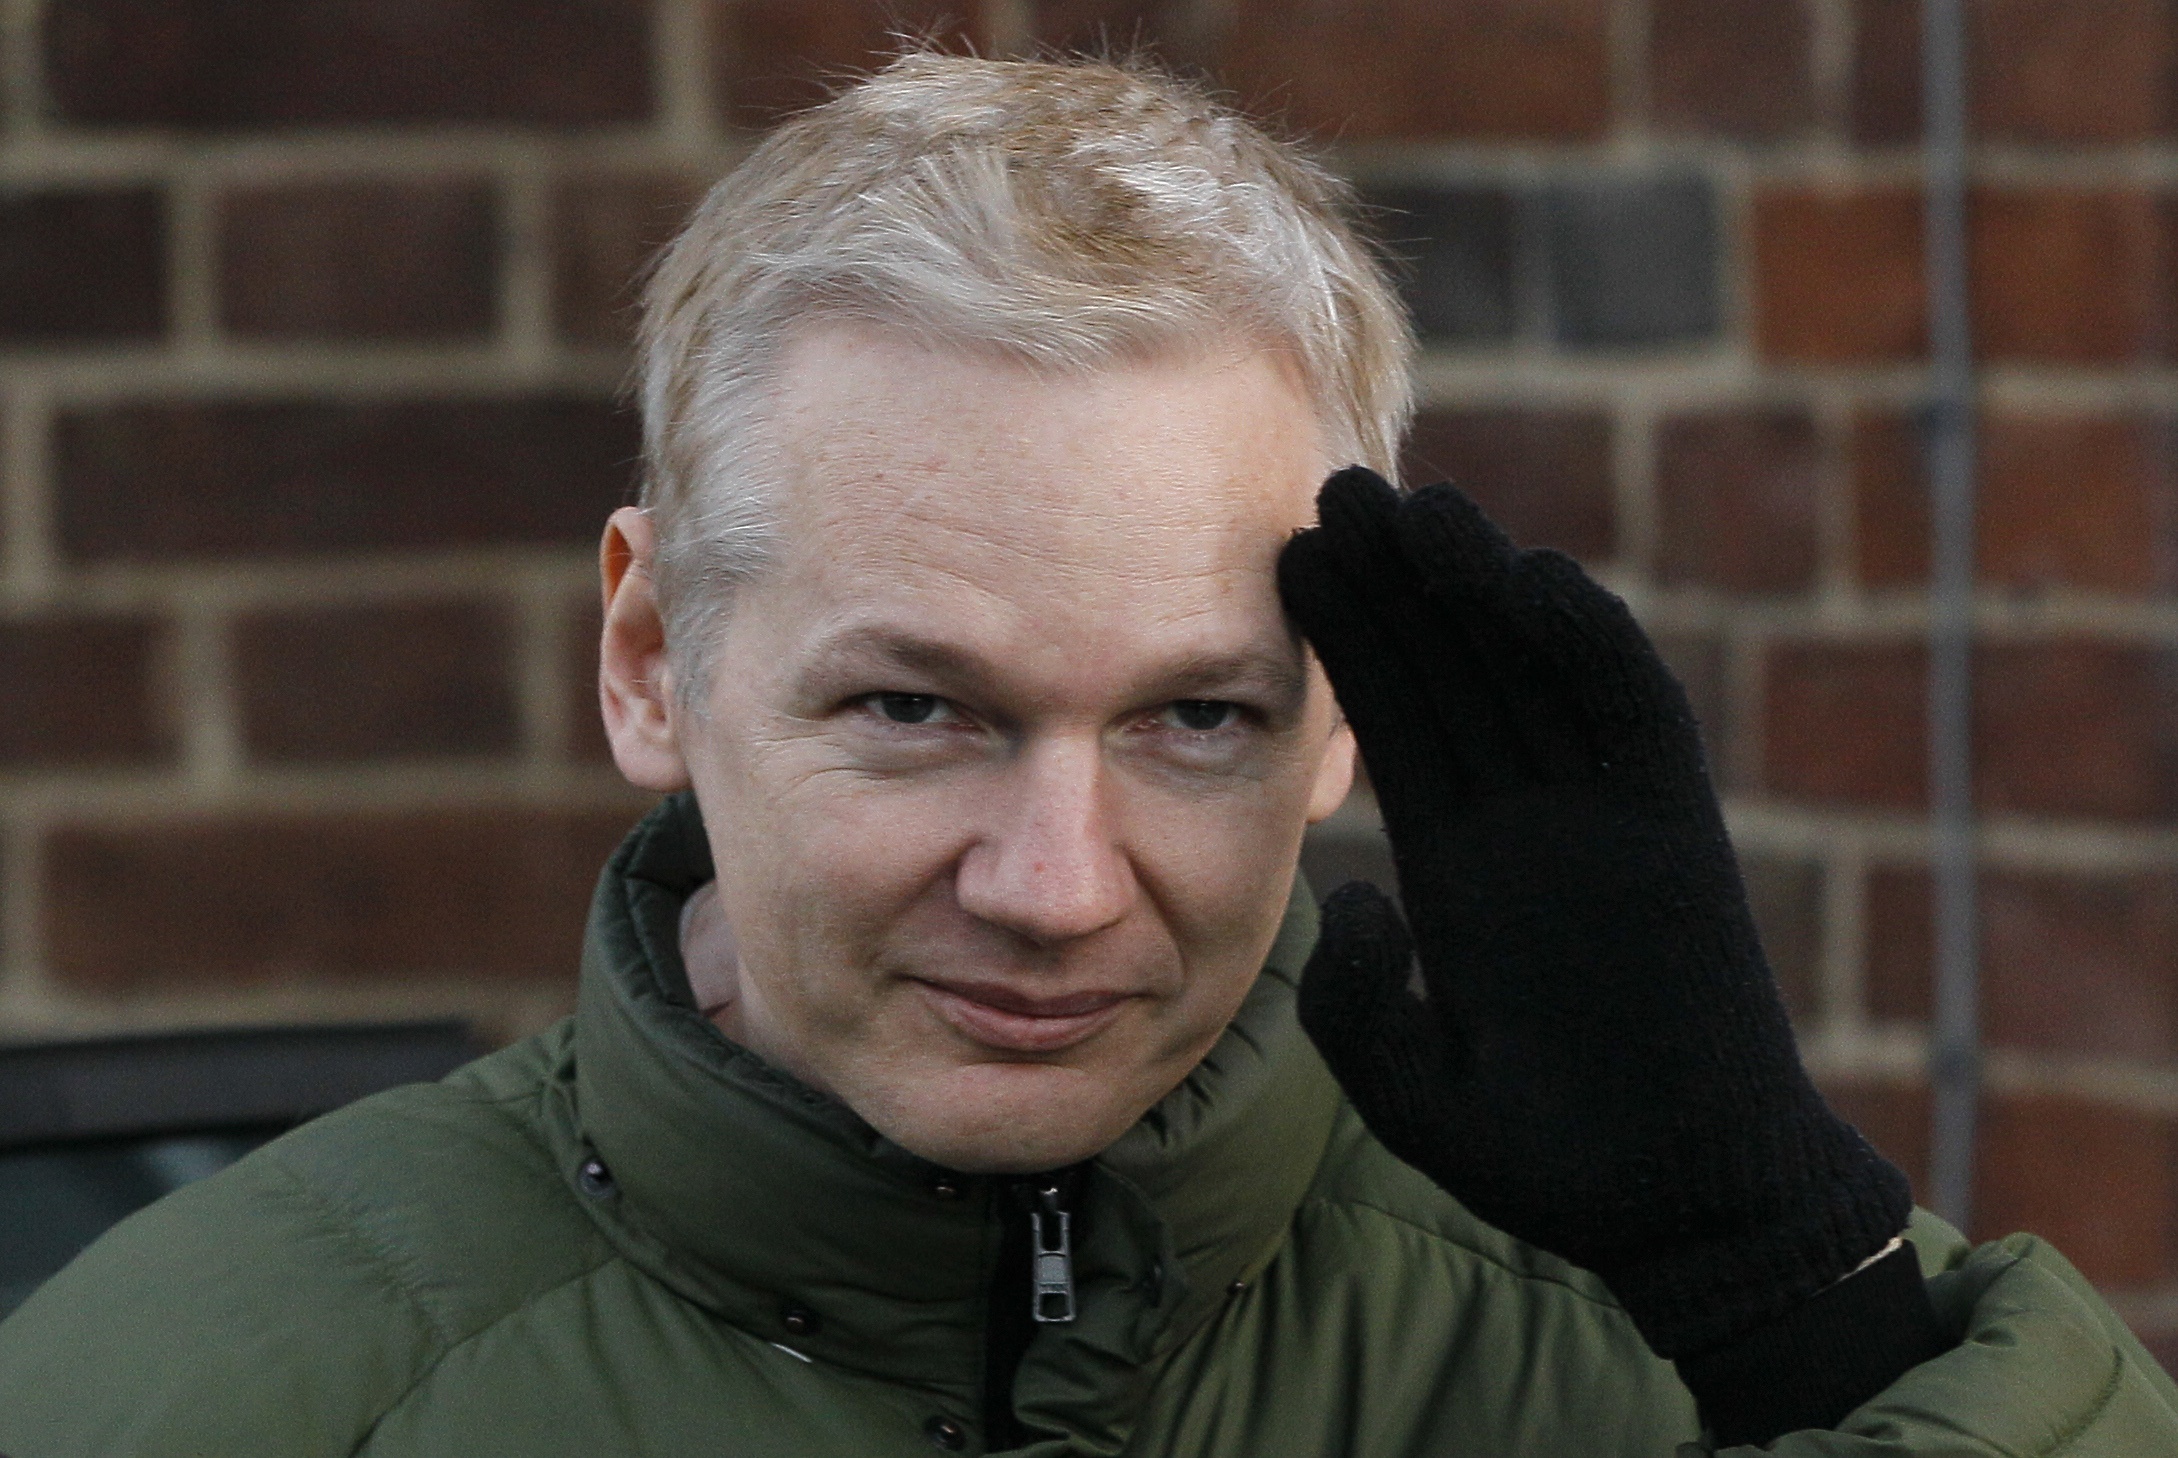 Våldtäkt , Sexualbrott, Wikileaks, Sverige, Julian Assange, Internet, Häktad